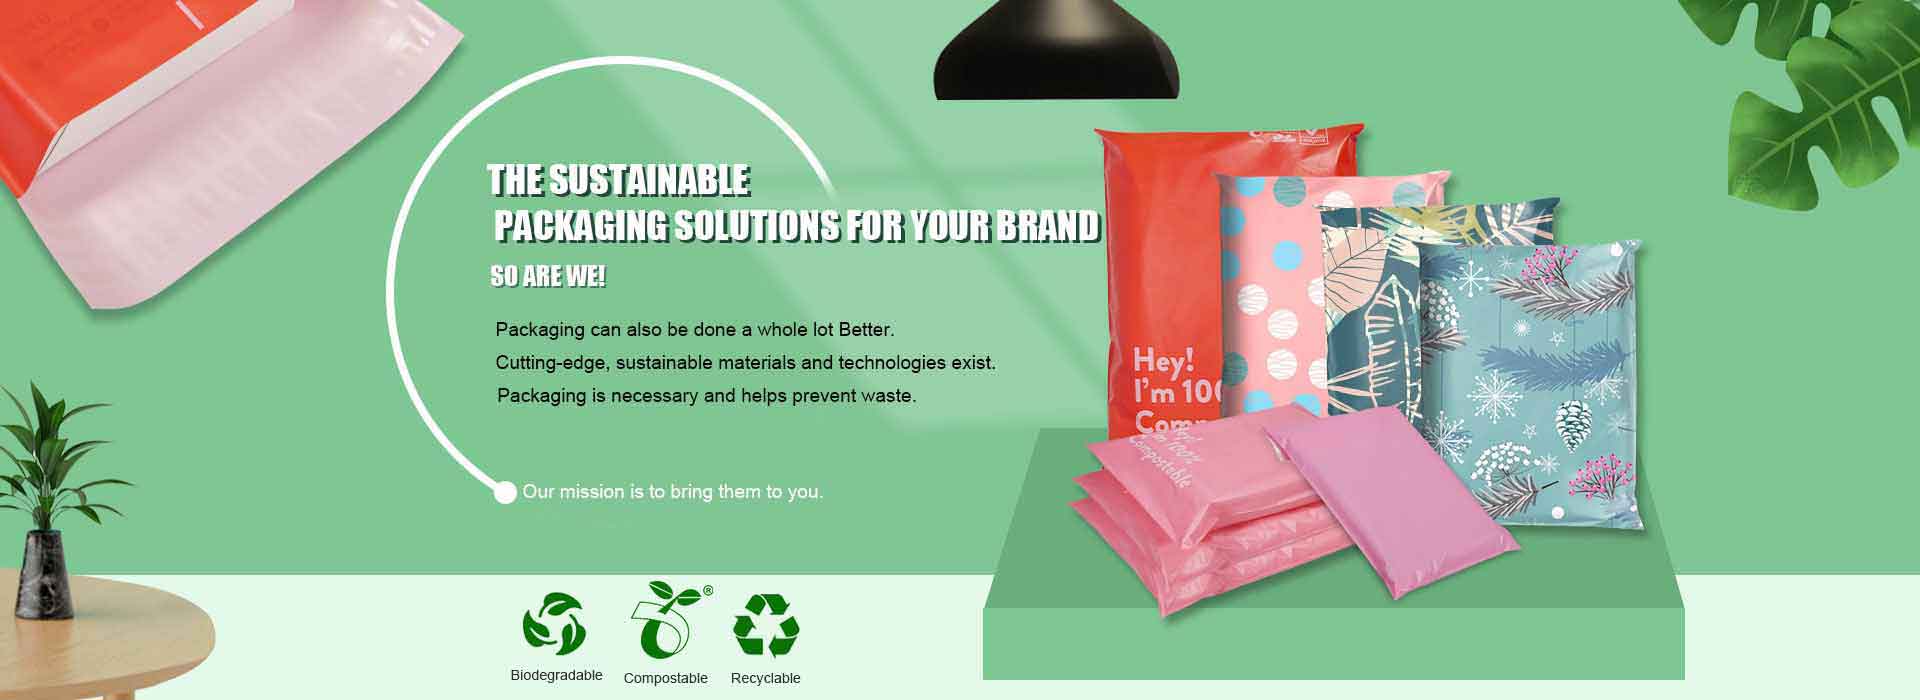 poly mailer pink mailing bag biodegradable compostable postage bag free shipping